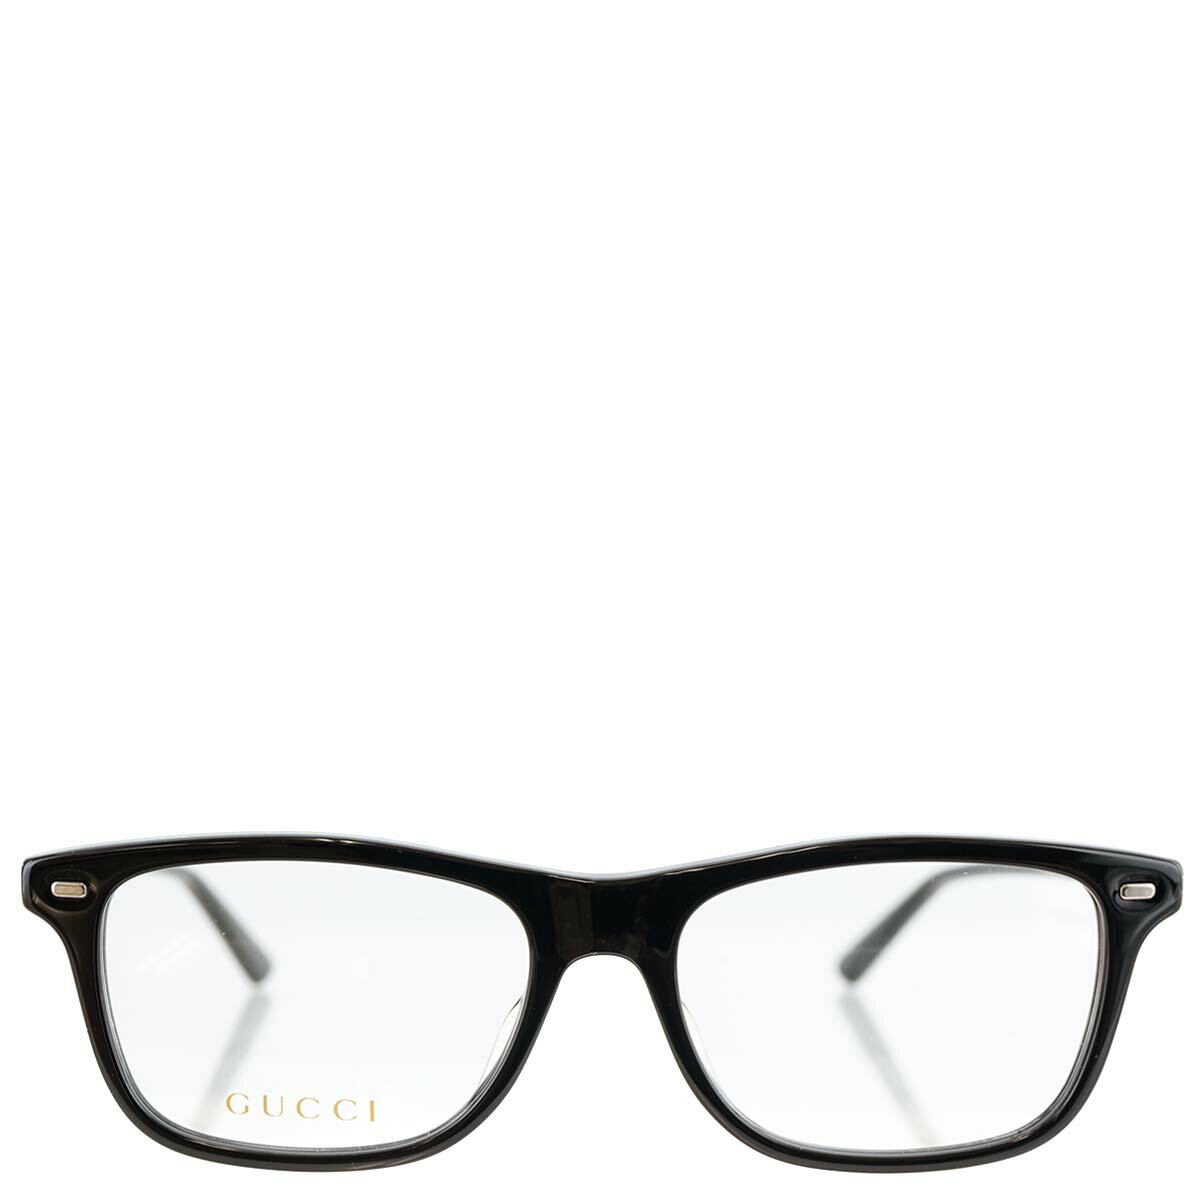 GUCCI グッチ 眼鏡 GG0519O 001 53 Optical Frame MAN ACETATE レディース 女性 メンズ 男性 ユニセックス 男女兼用 スクエア 伊達メガネ 伊達眼鏡 フレーム BLACK/RUTHENIUM TRANSPARENT ブラック